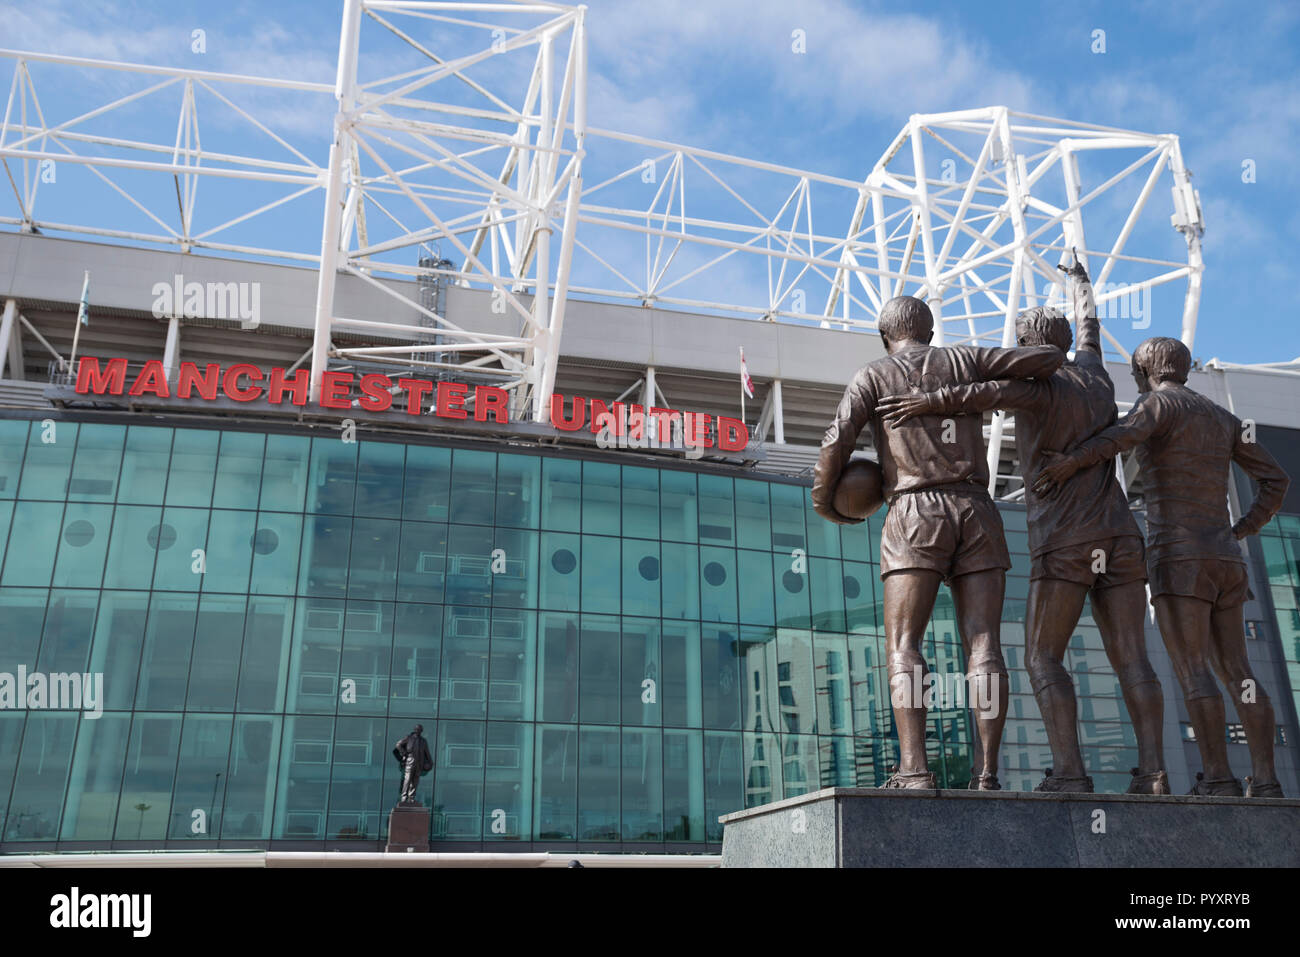 Statue au mieux les joueurs, le droit, et Charlton à Old Trafford, Manchester United Football / Soccer Stadium. Manchester, Angleterre. Banque D'Images